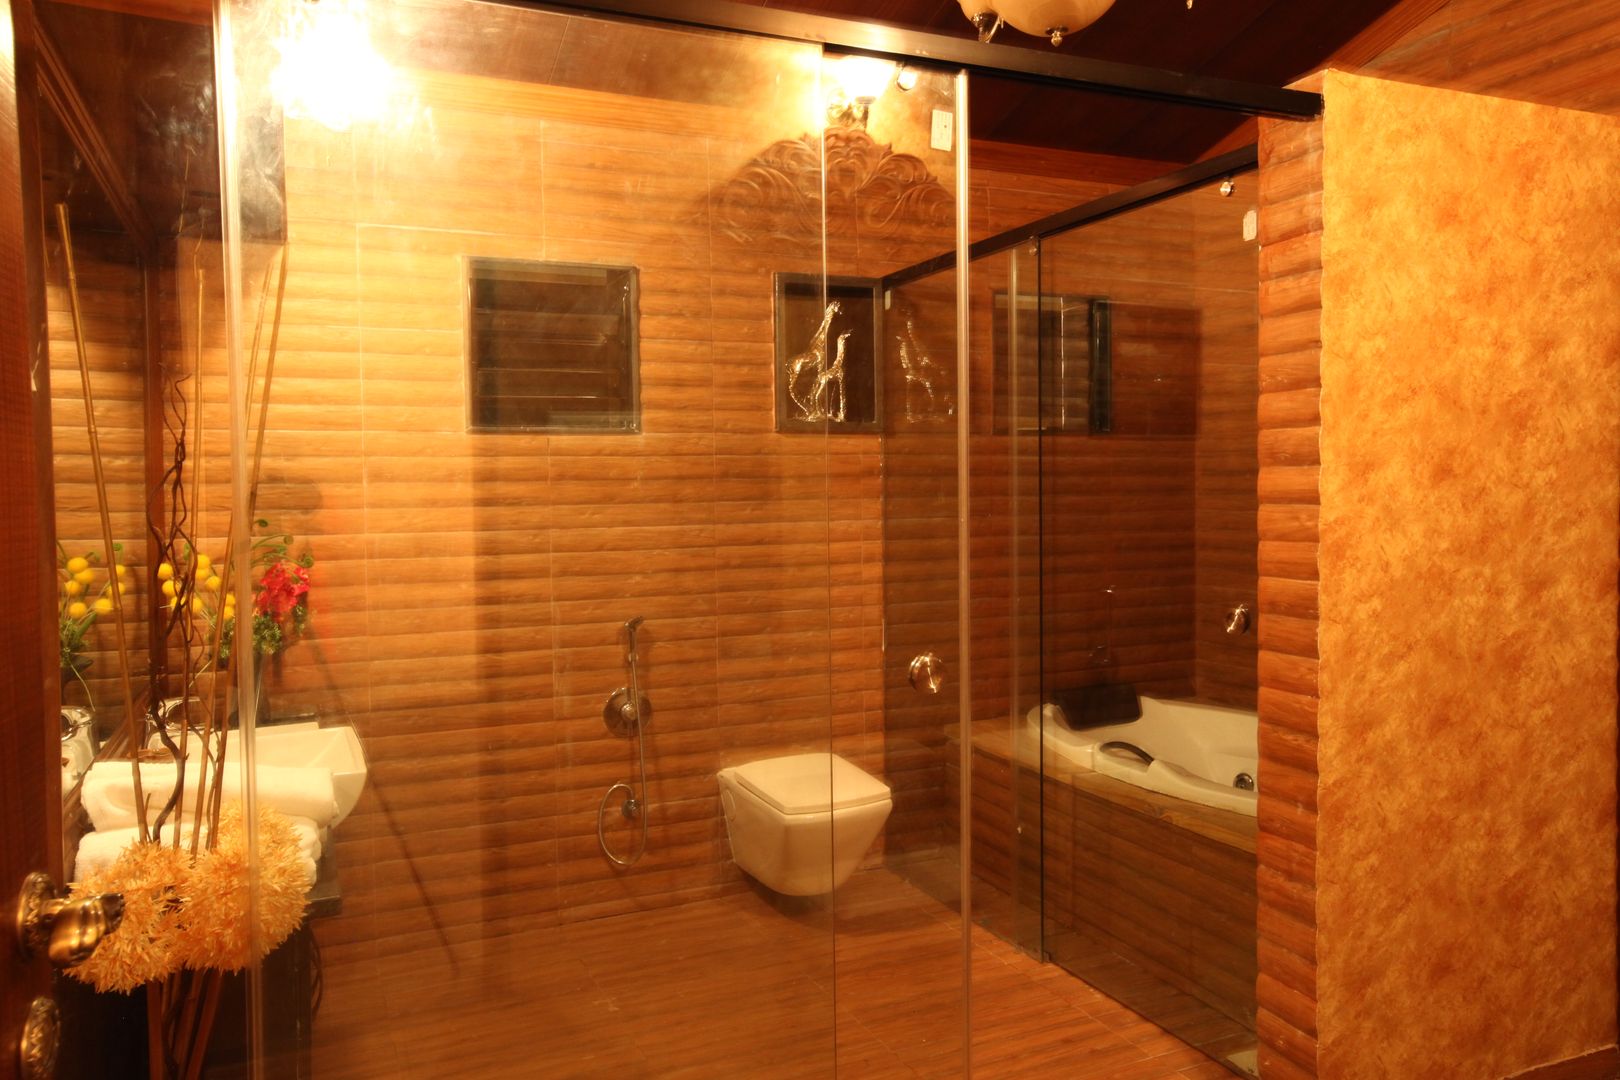 APPLE POOL VILLA, The Designs The Designs Rustic style bathroom